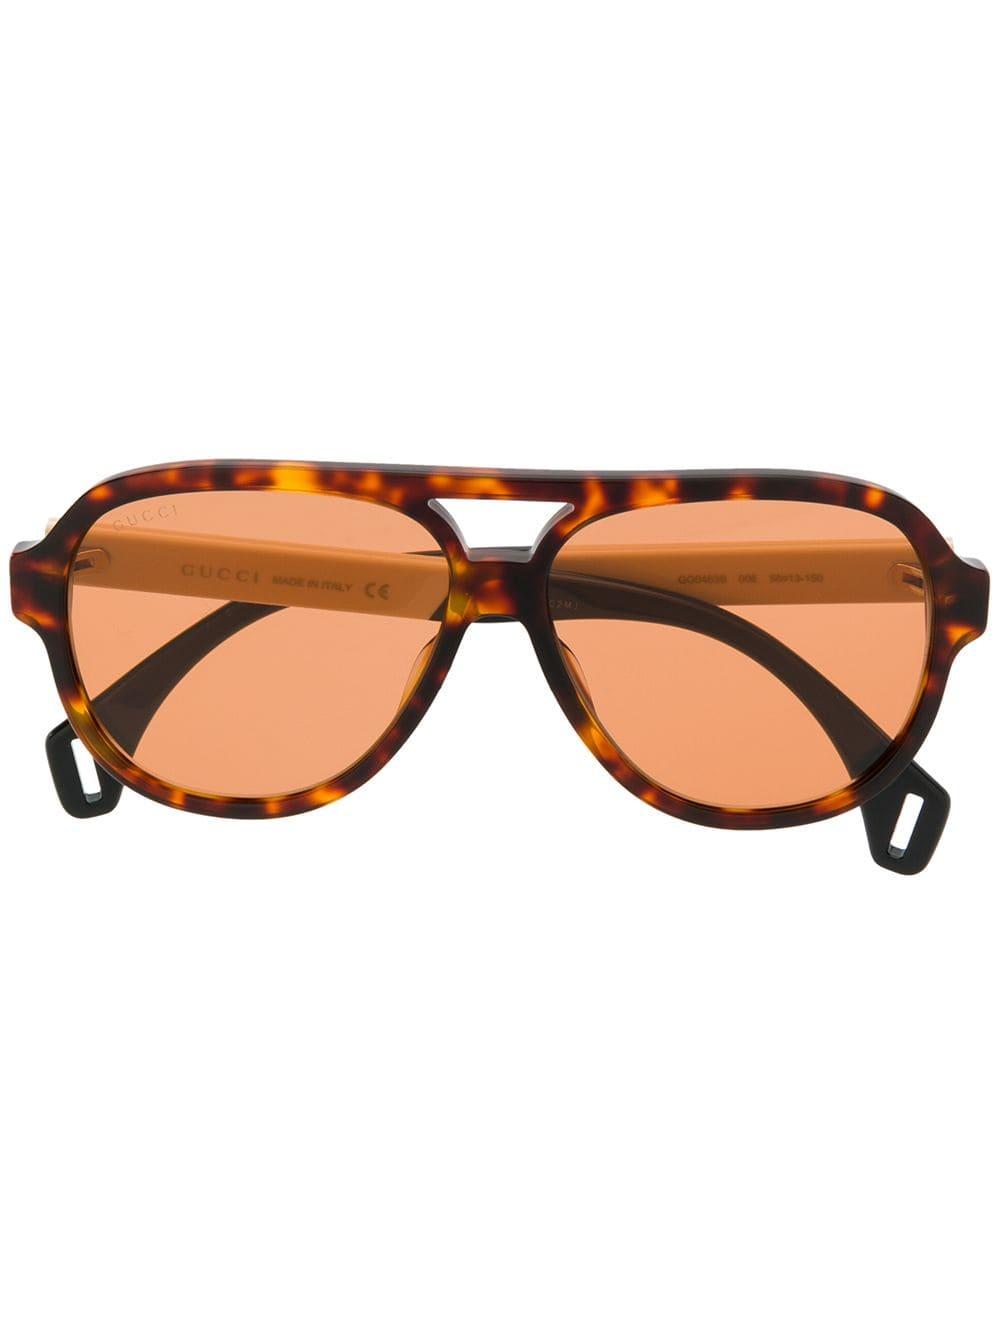 Gucci Tortoiseshell Aviator Sunglasses In Brown For Men Lyst